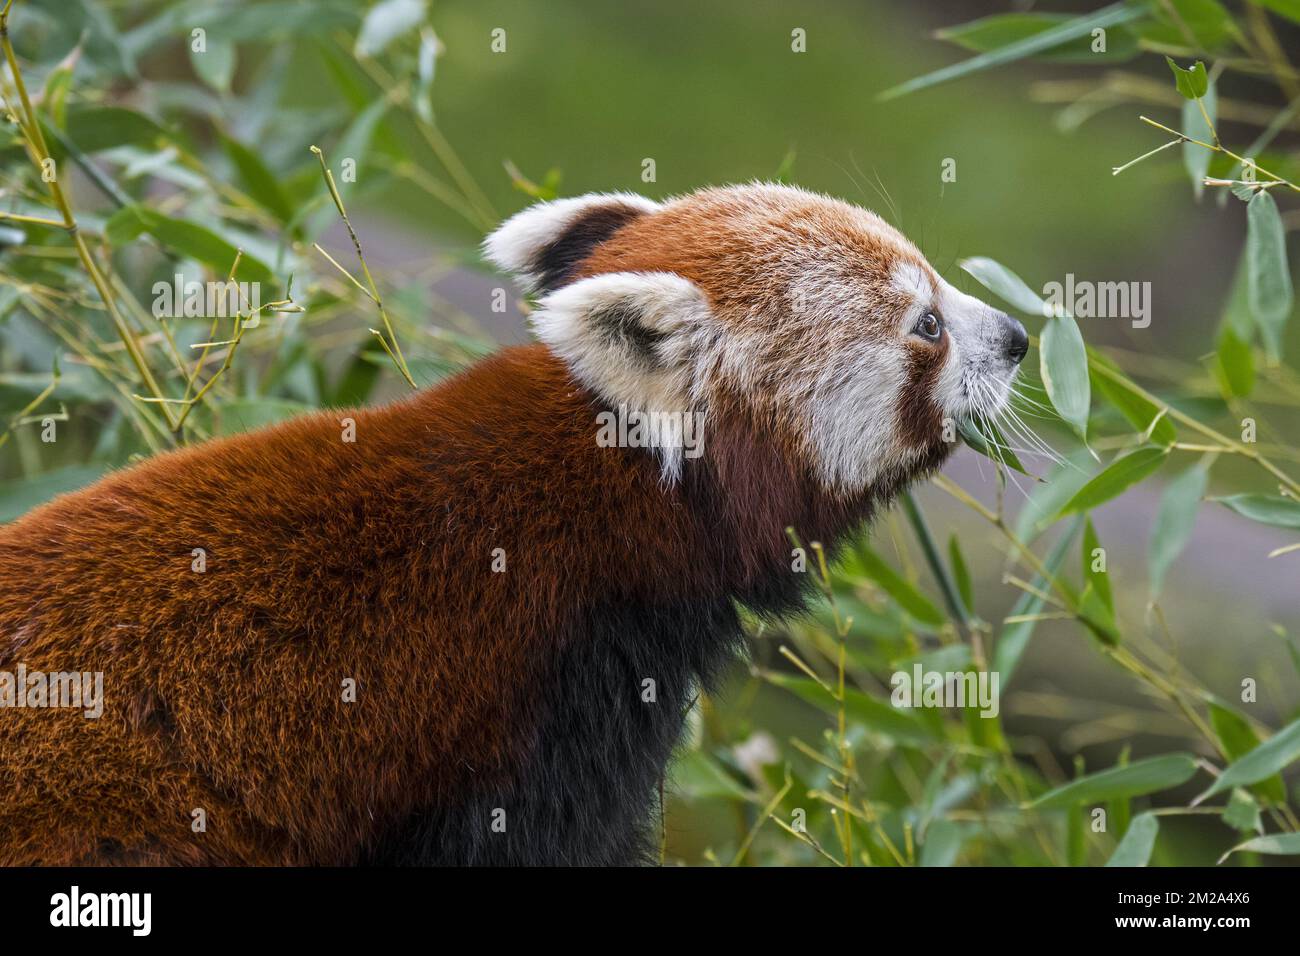 Roter Panda / kleiner Panda (Ailurus fulgens), der Bambusblätter isst, aus dem östlichen Himalaya und Südwestchina stammt | Petit Panda / Panda roux / Panda éclatant (Ailurus fulgens) de l'Himalaya et de la Chine 20/09/2017 Stockfoto